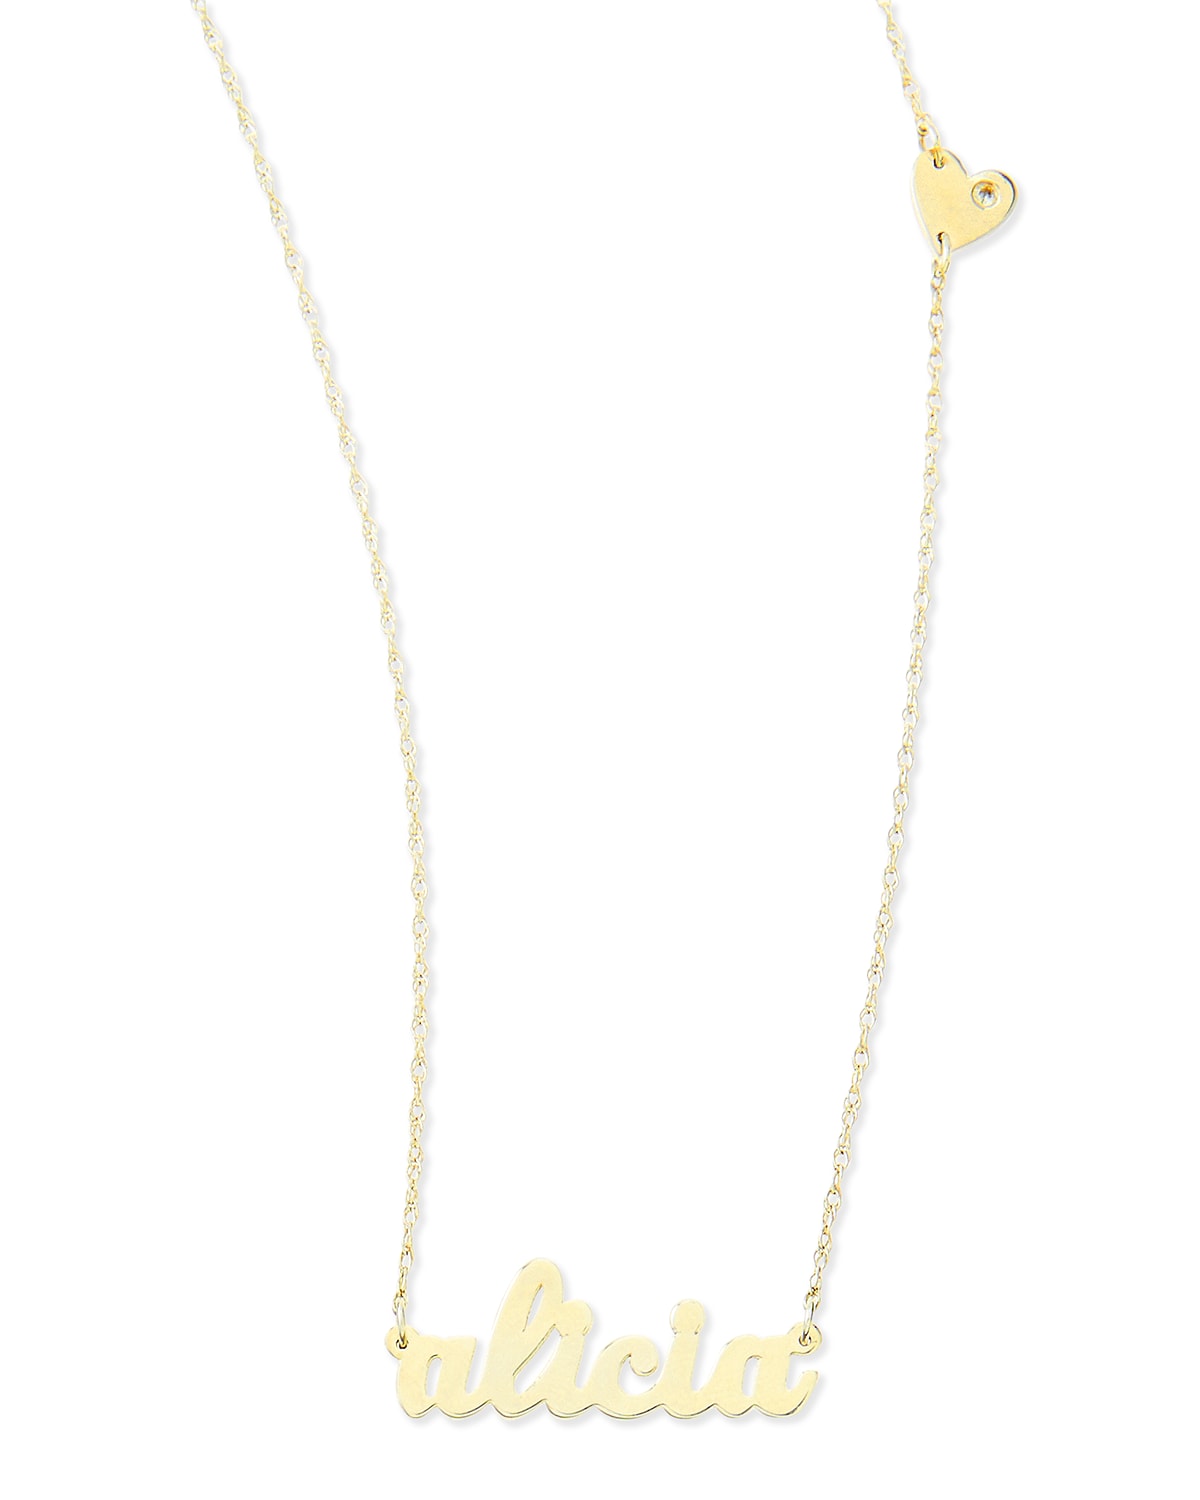 Jennifer Zeuner Abigail-Style Personalized Name Necklace with Diamond Heart